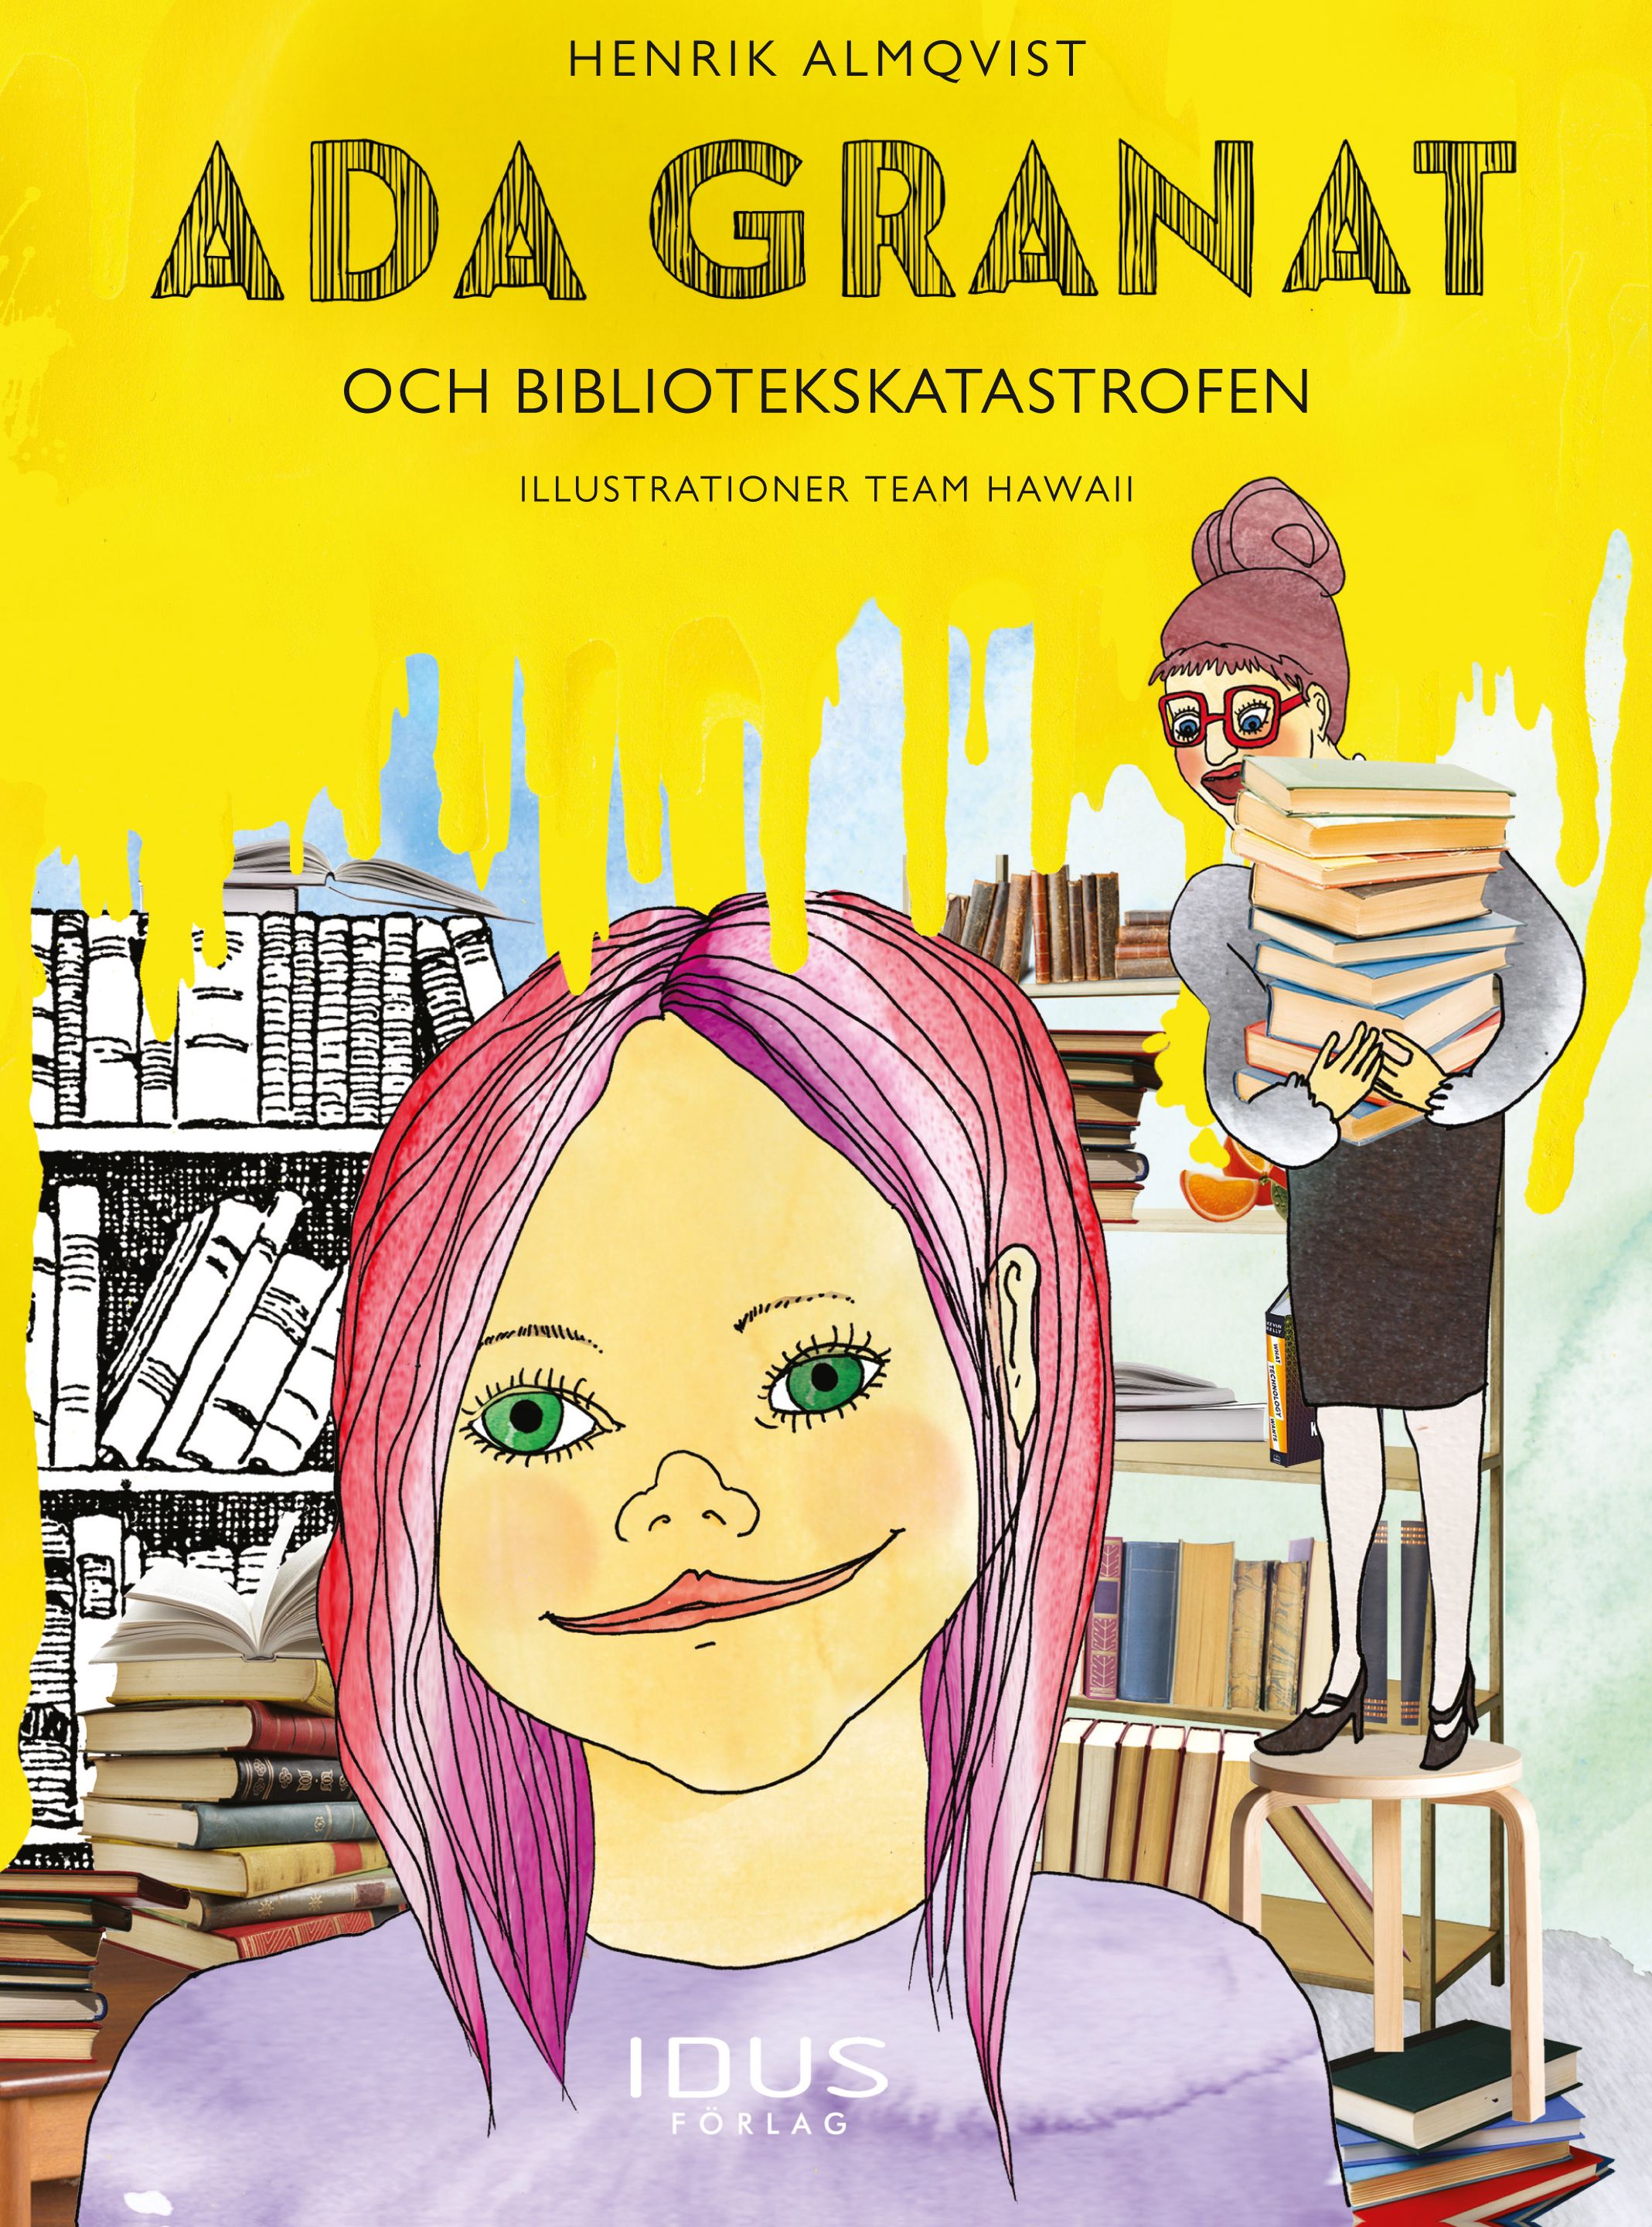 Bibliotekskatastrofen, eBook by Henrik Almqvist